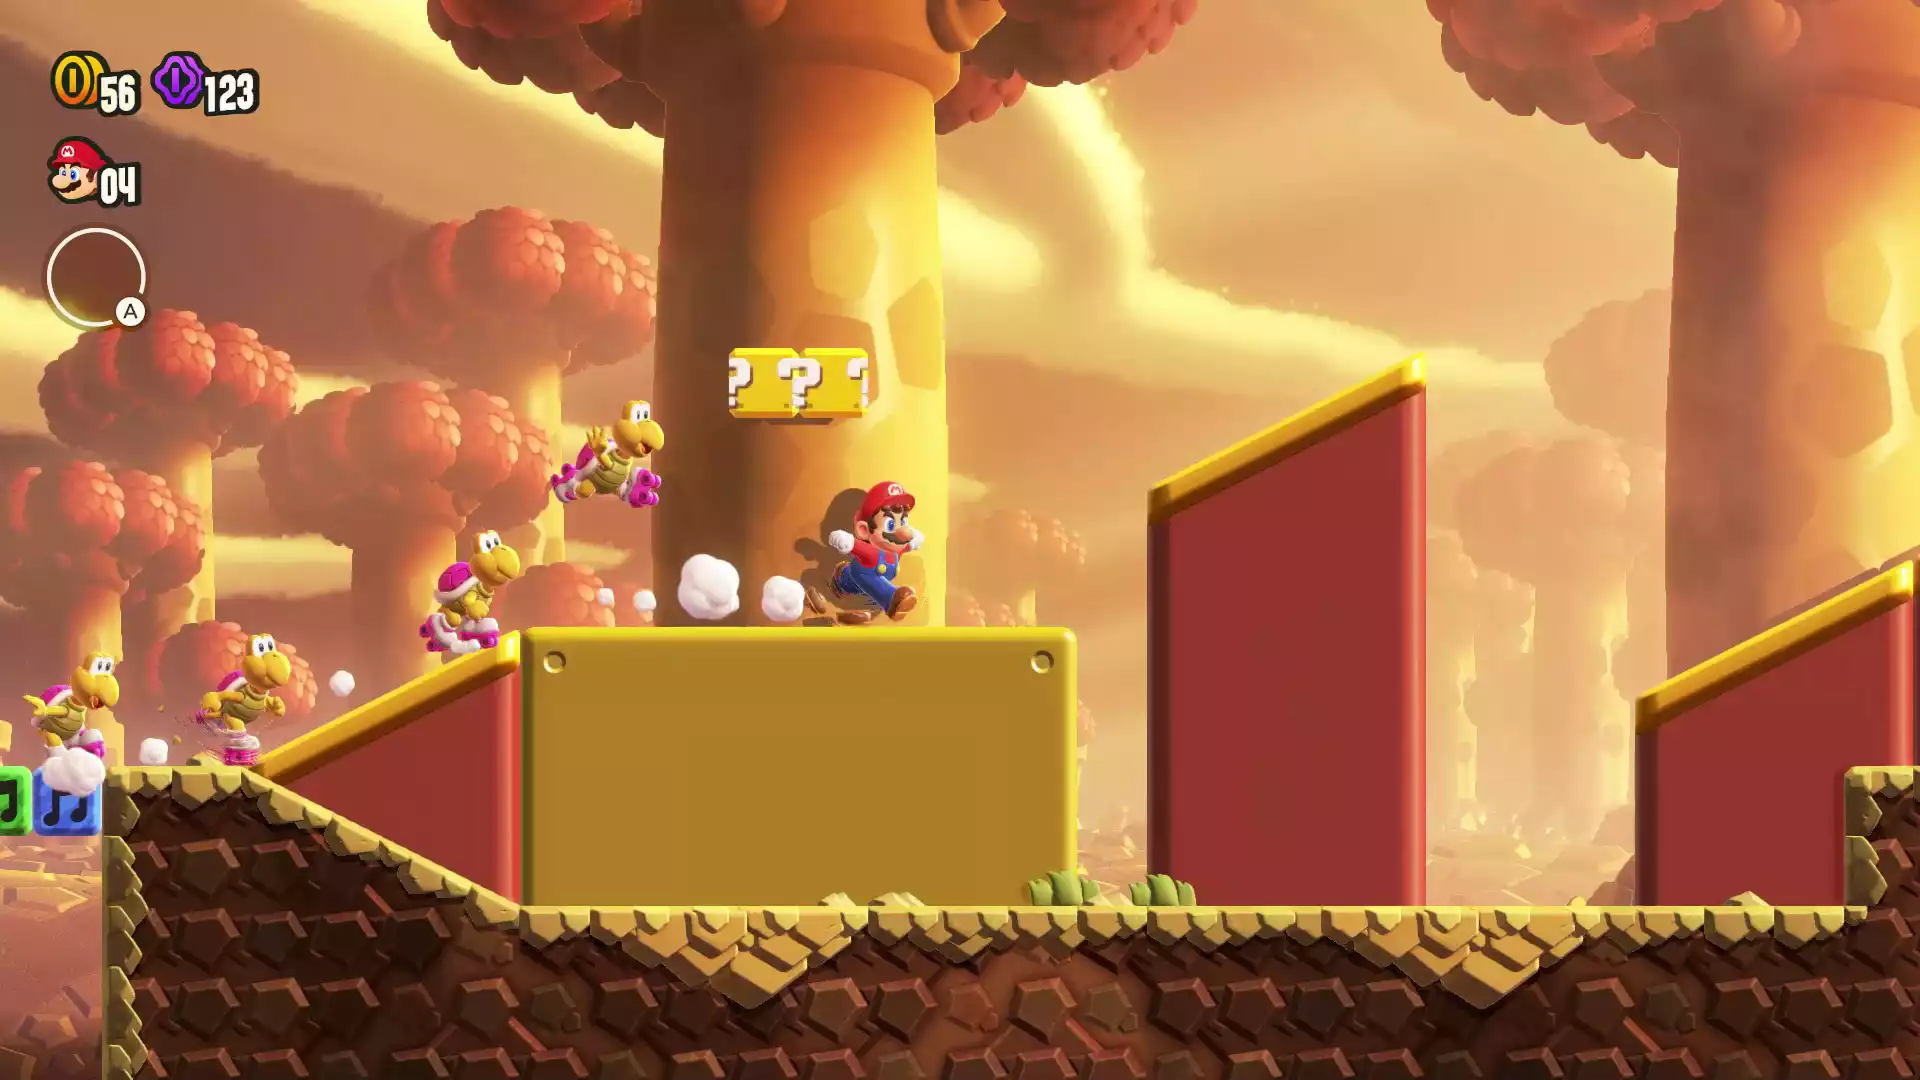 Will Super Mario Bros. Wonder have multiplayer & co-op?